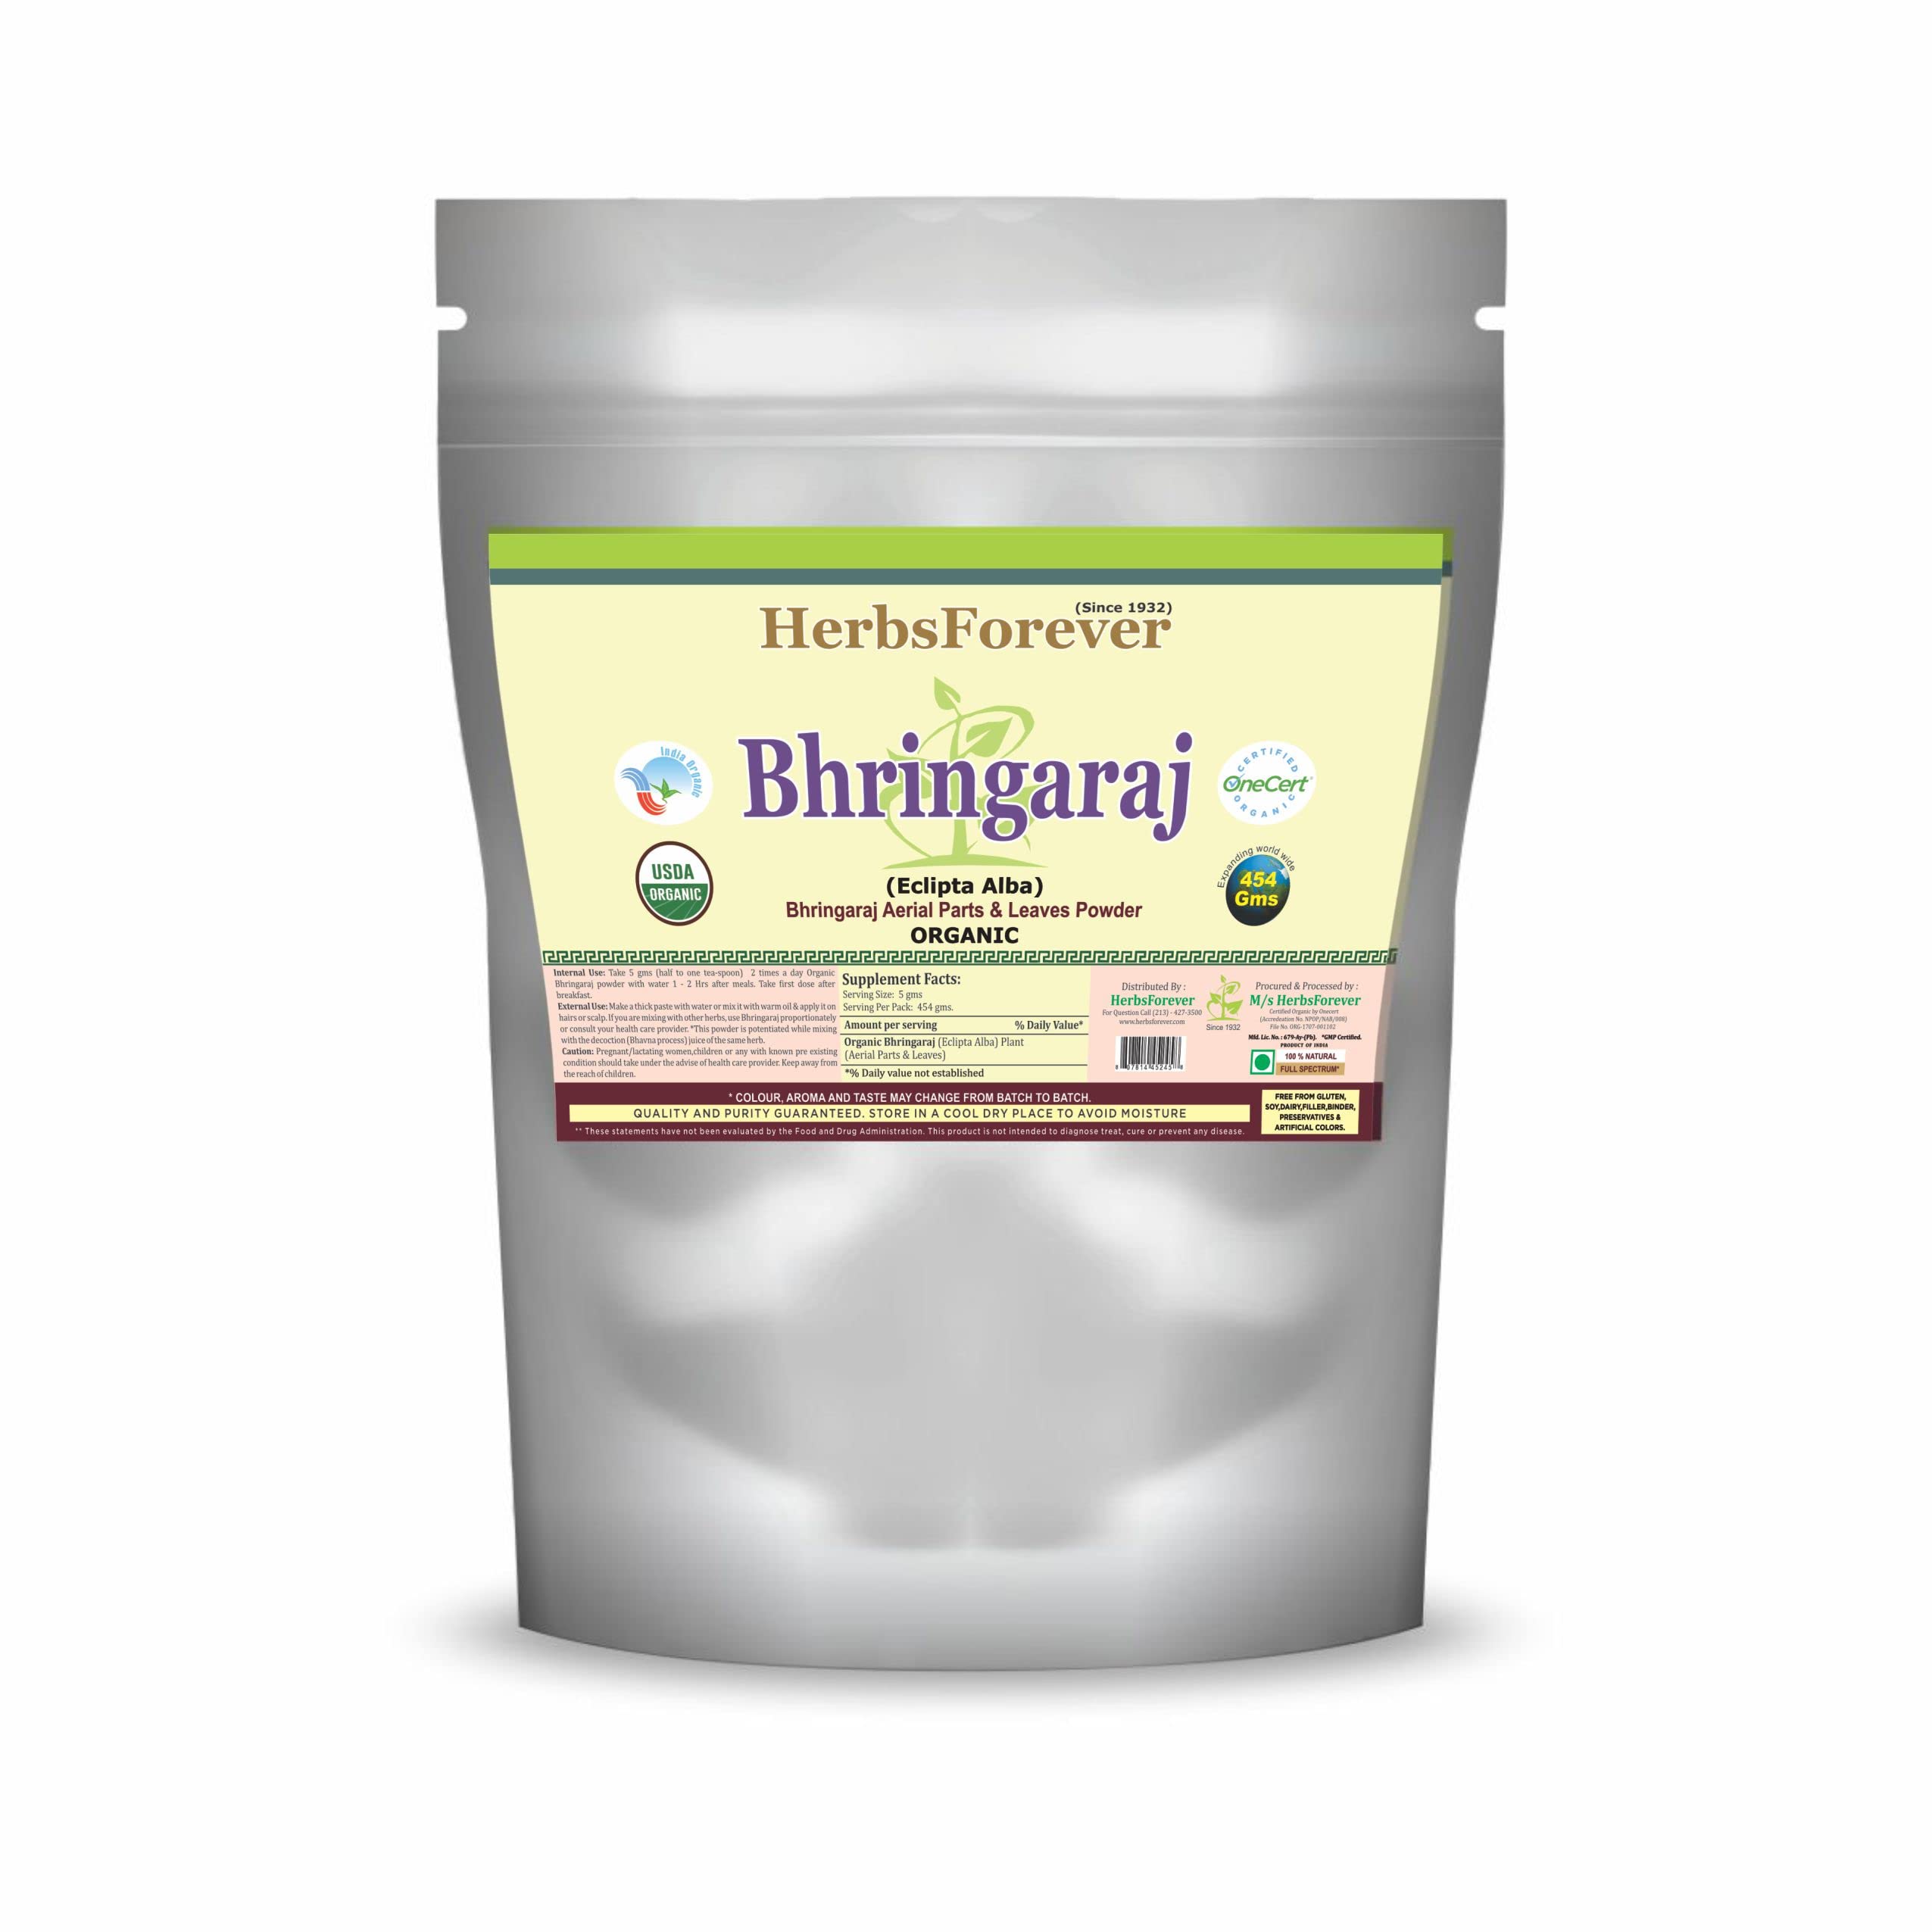 HerbsForever Organic Bhringaraj Powder(Ayurvedic Hair Care herb (Eclipta Alba) USDA Certified,100% Natural Hair Conditioner,for Hair Growth, nourishes Hair follicles,16 Oz,454 GMS,2X(Optimum Potency)